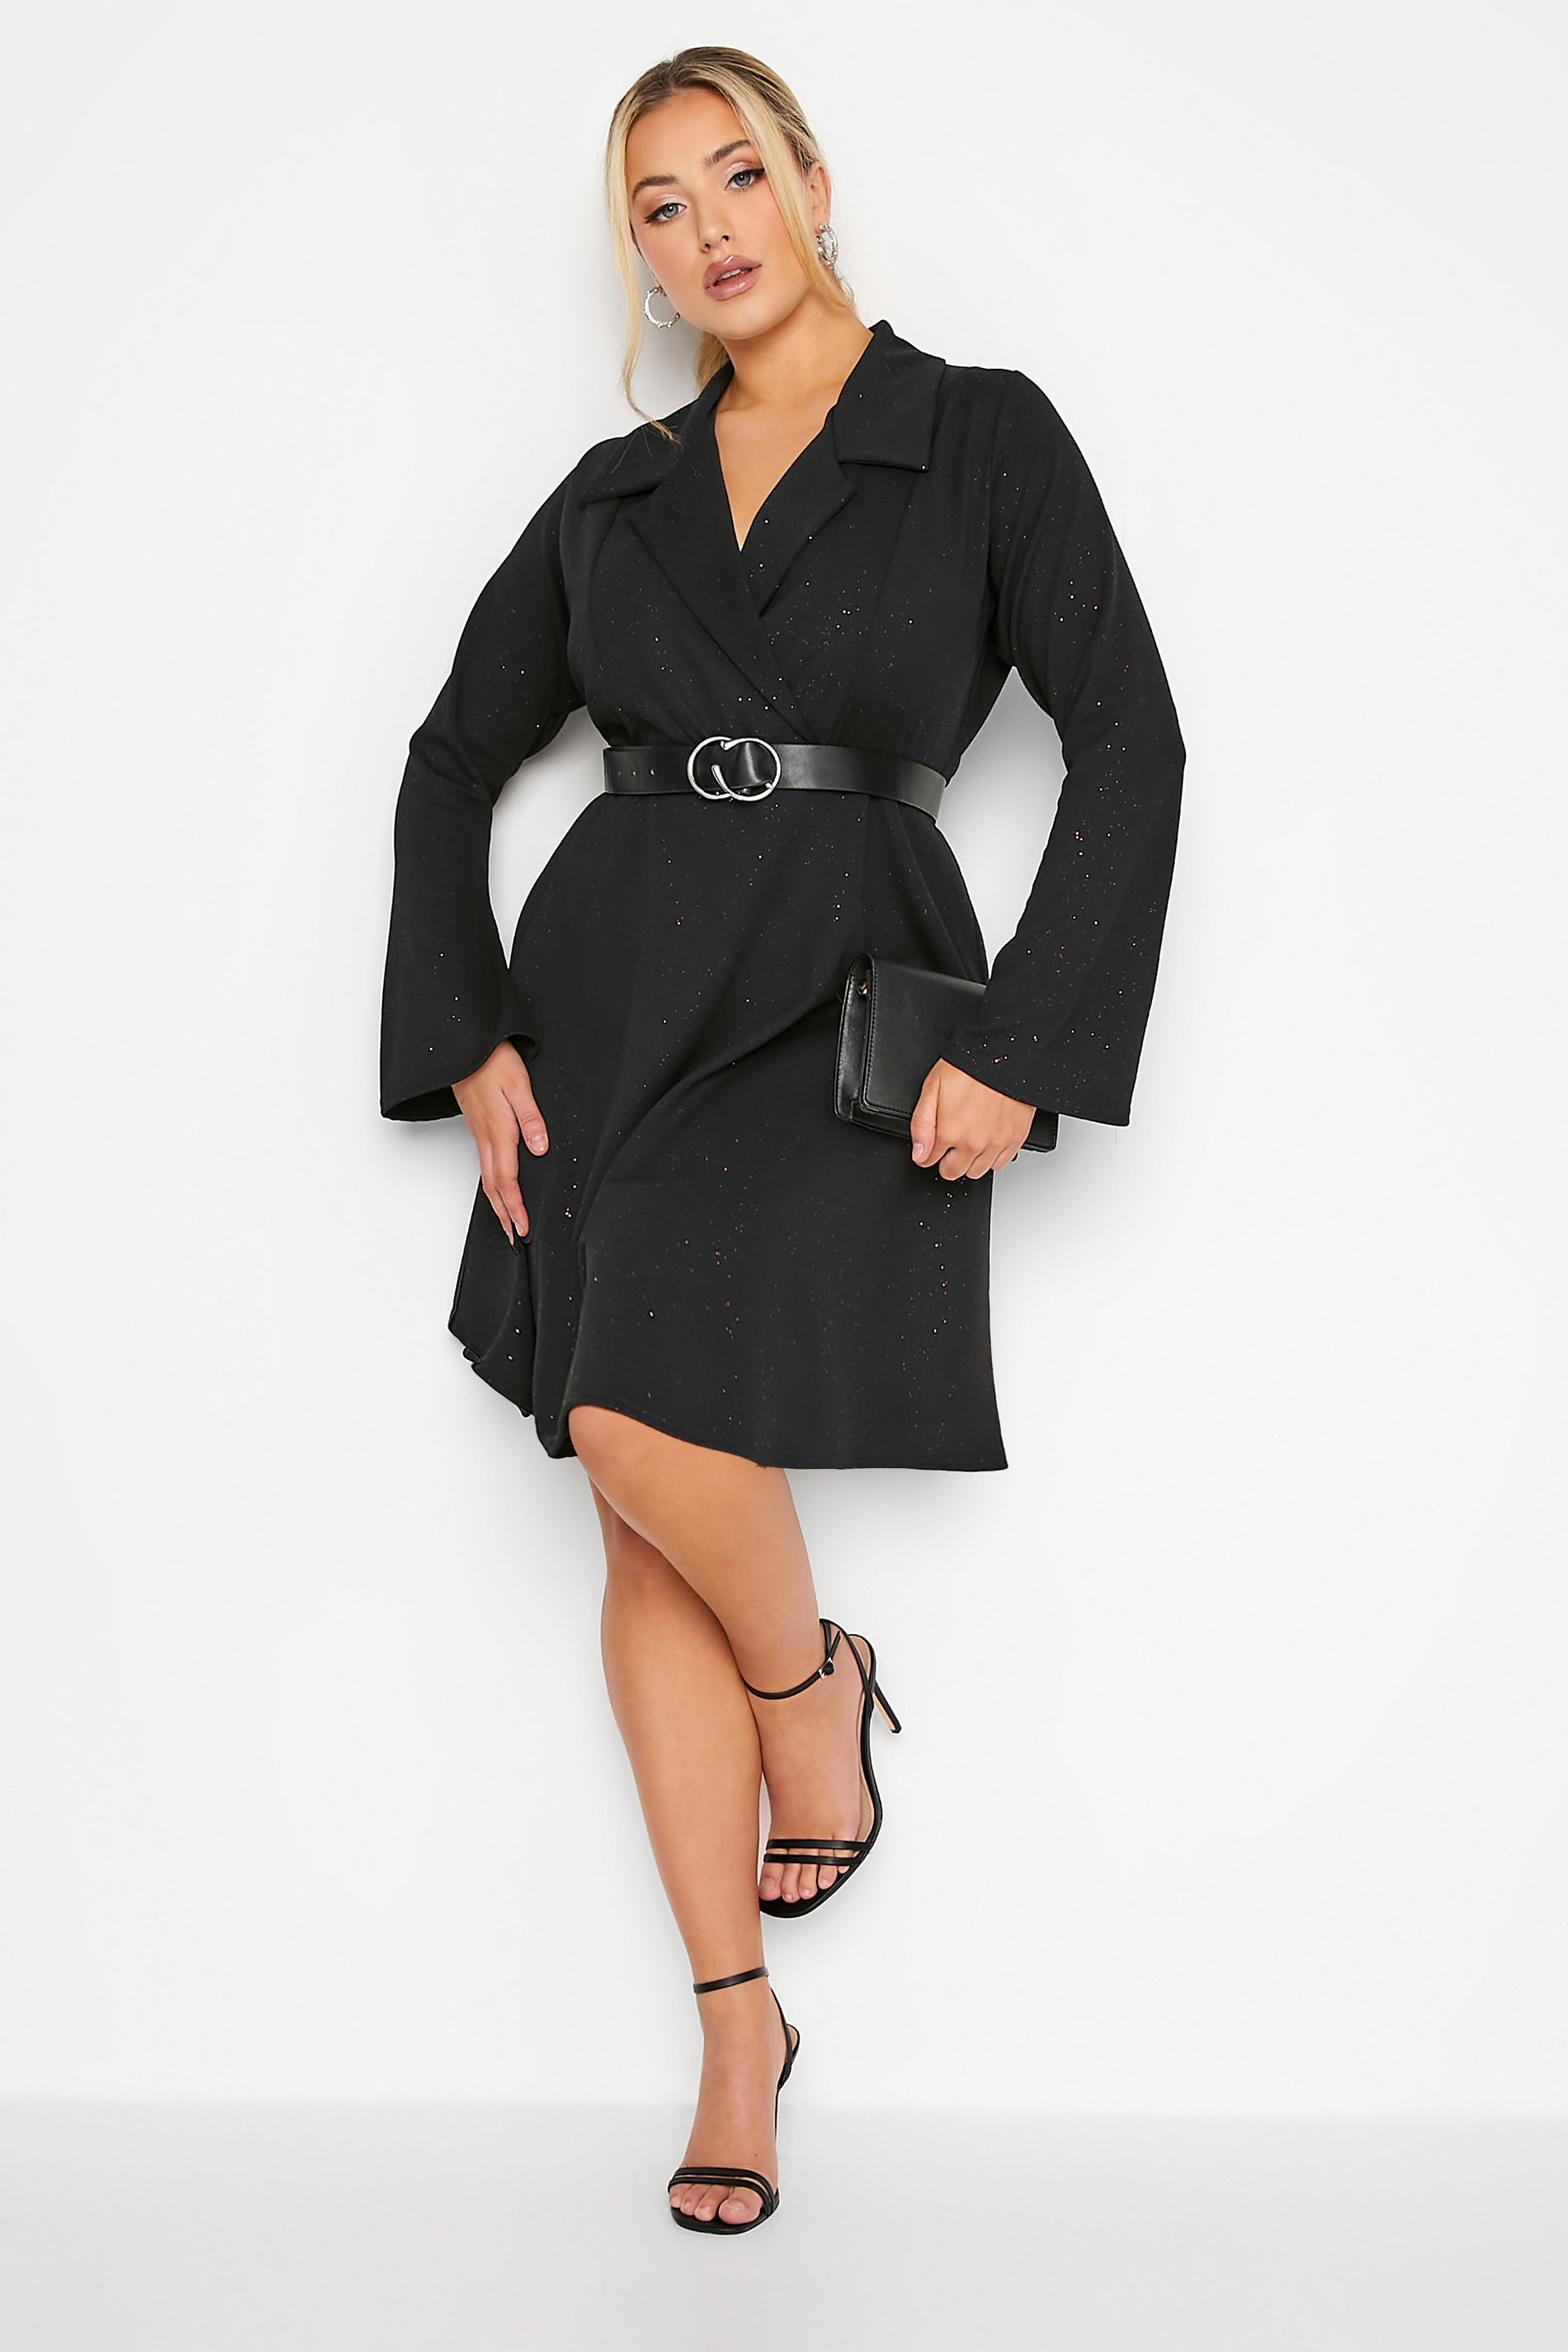 Curve Plus Size Black Glitter Blazer Dress | Yours Clothing 1